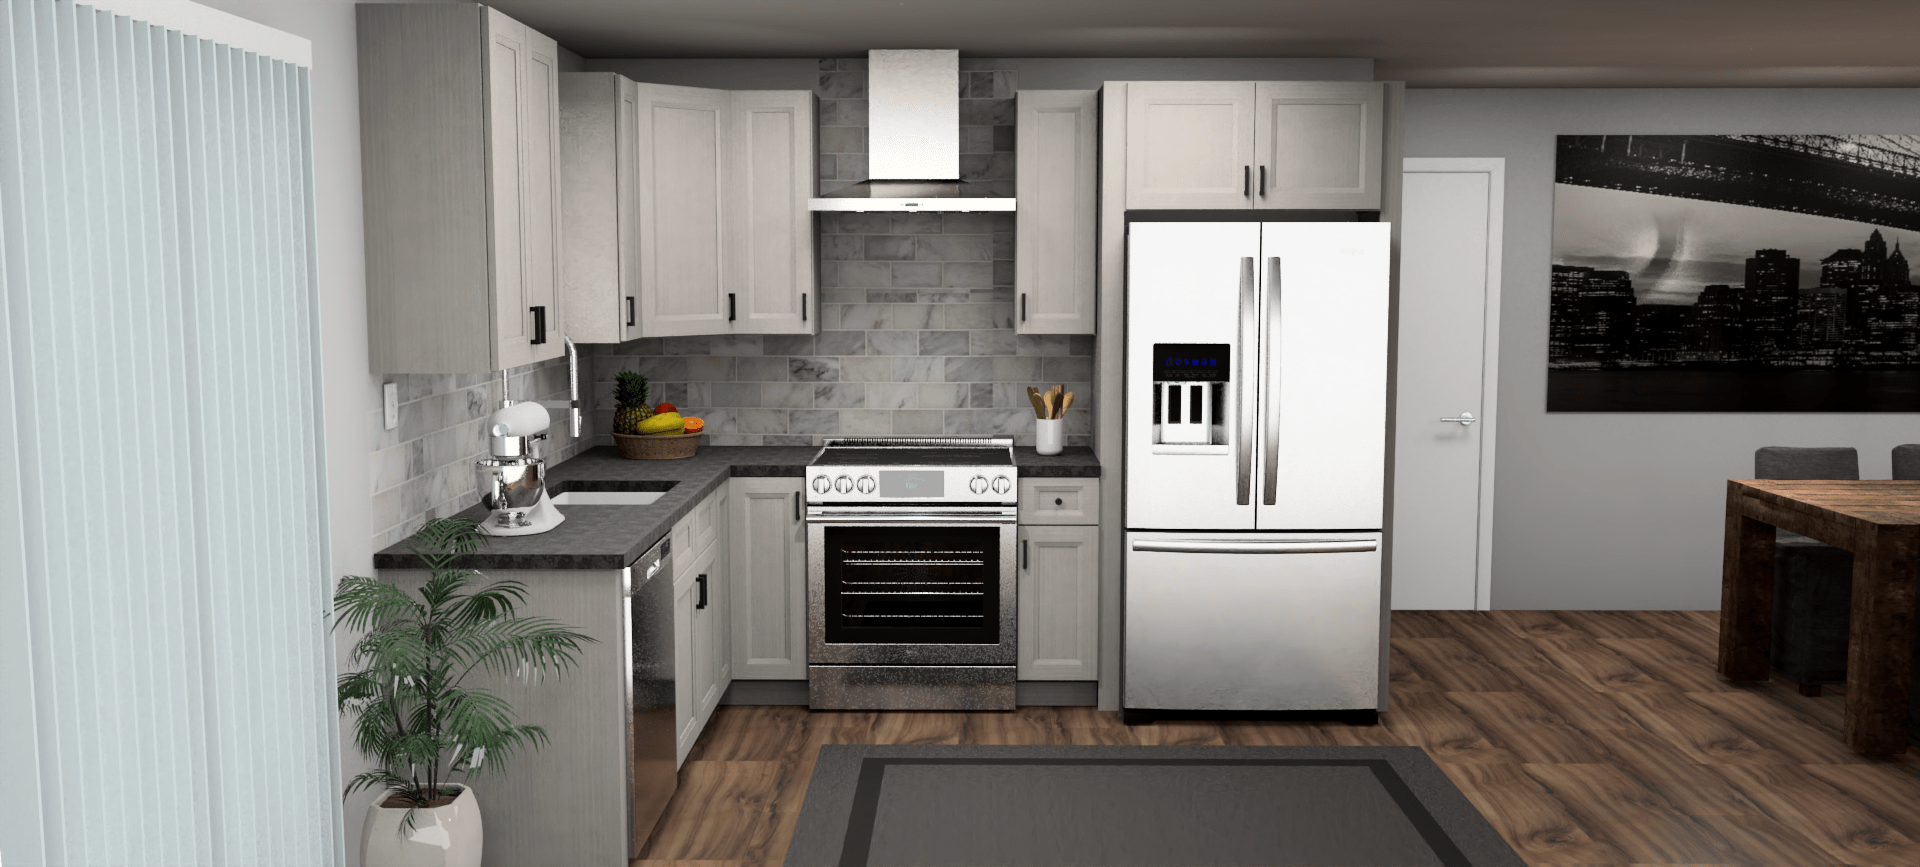 Fabuwood Allure Onyx Horizon 8 x 10 L Shaped Kitchen Front Layout Photo